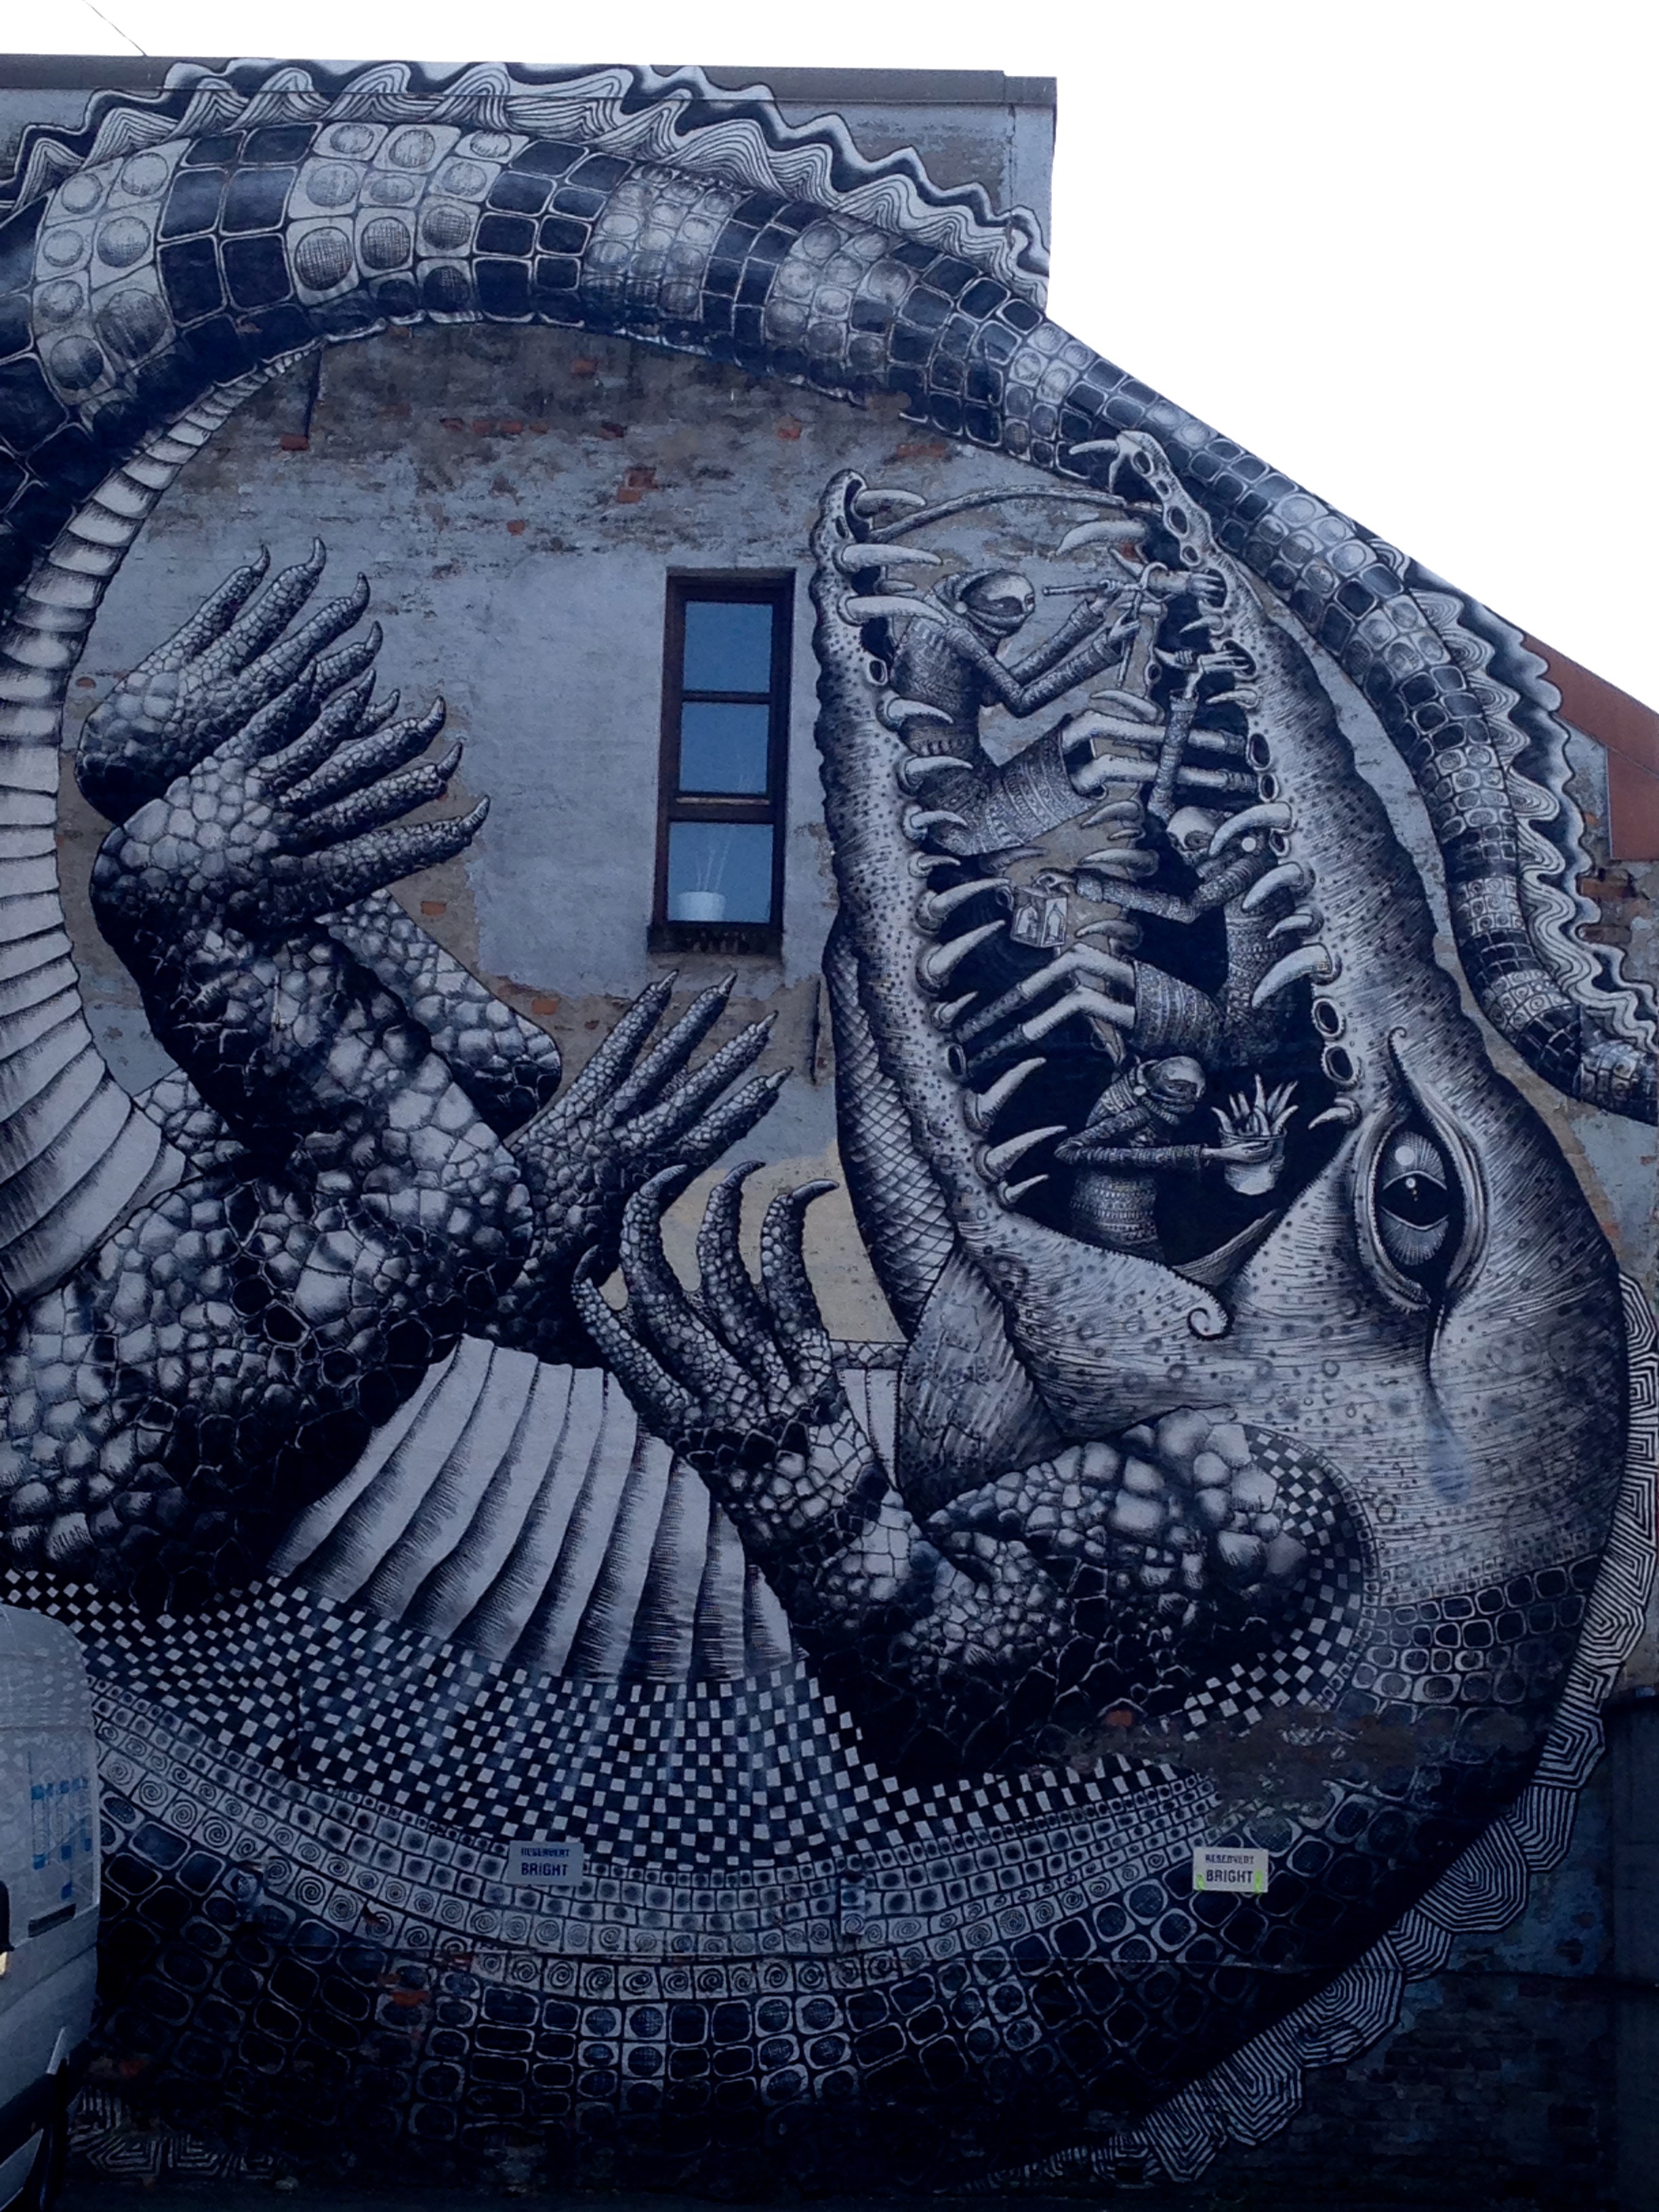 Oslo Street Art